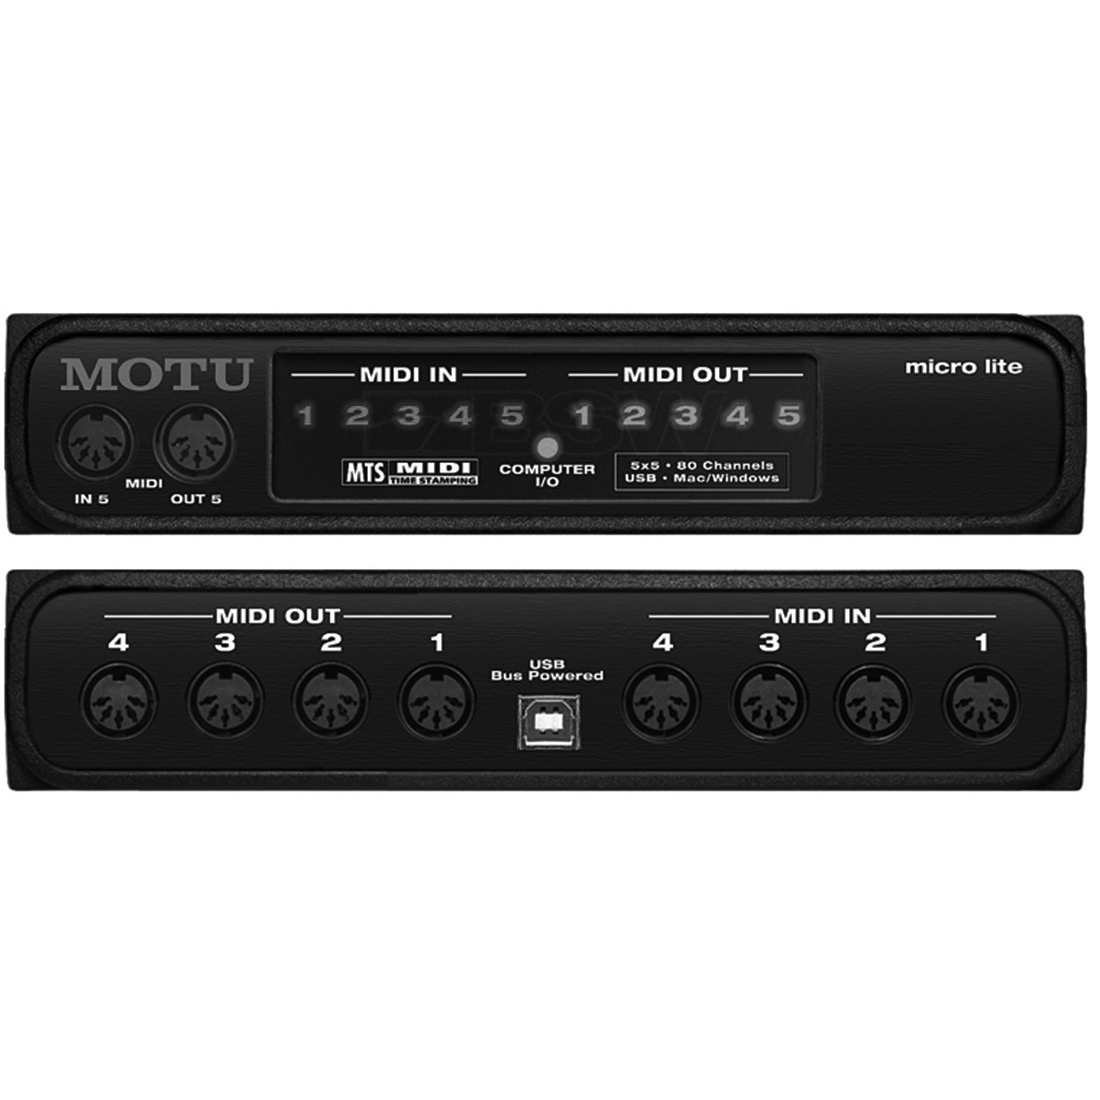 Микро лайт. Midi-Интерфейс Motu Micro Lite. Motu Ultralite mk3 Hybrid. Motu 828 mk3 Hybrid панель. Motu Monitor 8.